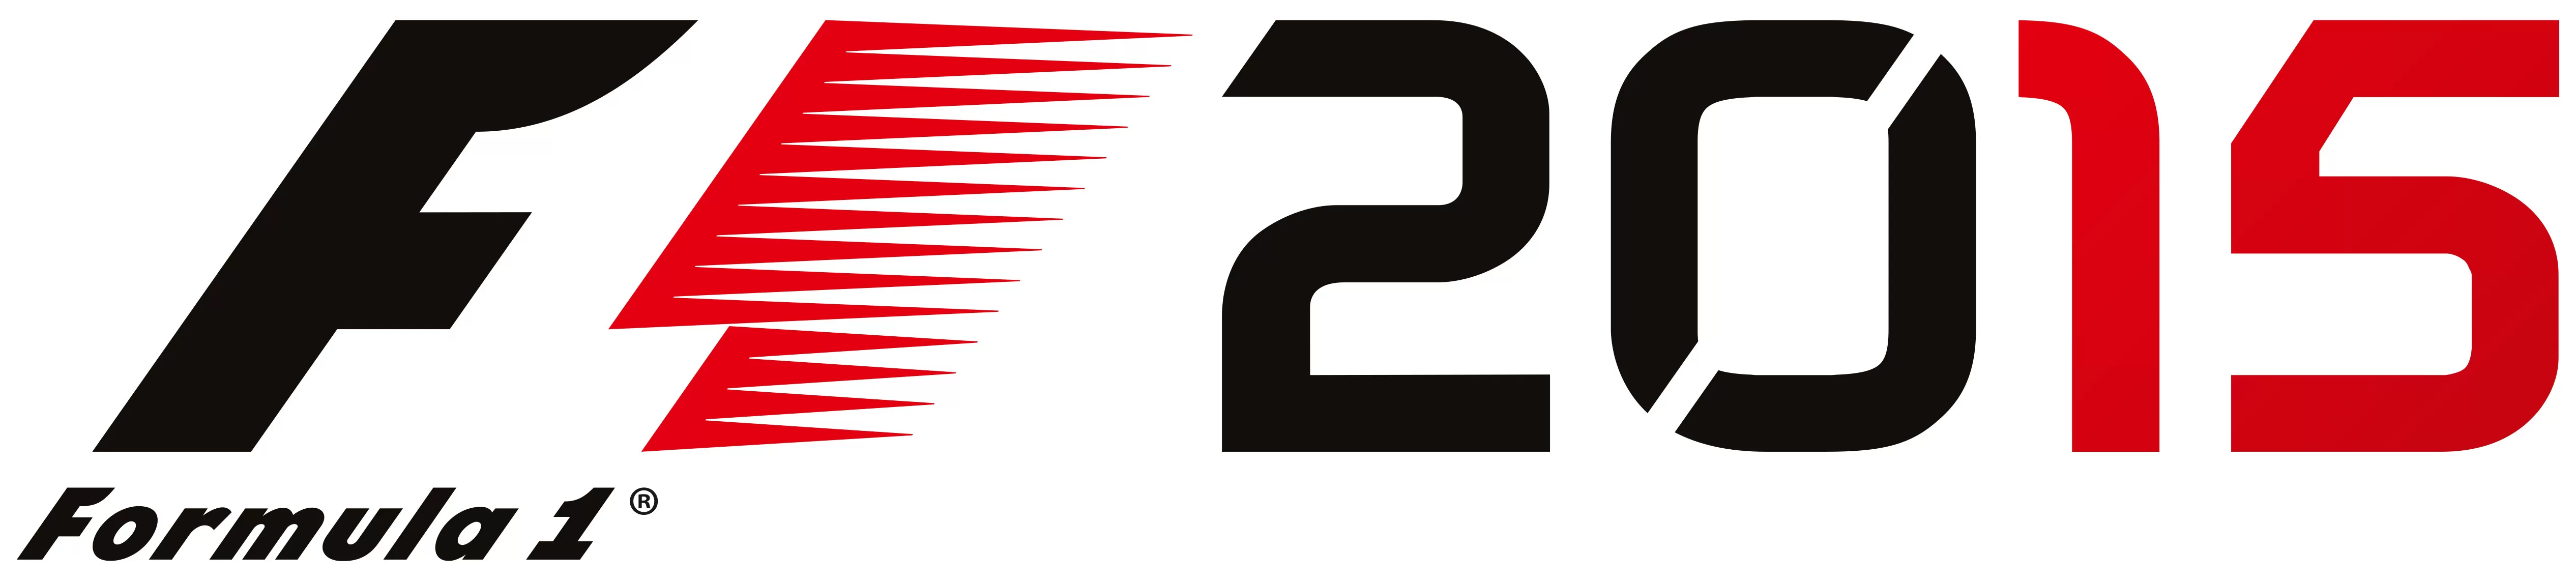 F1 2015 logo cmyk